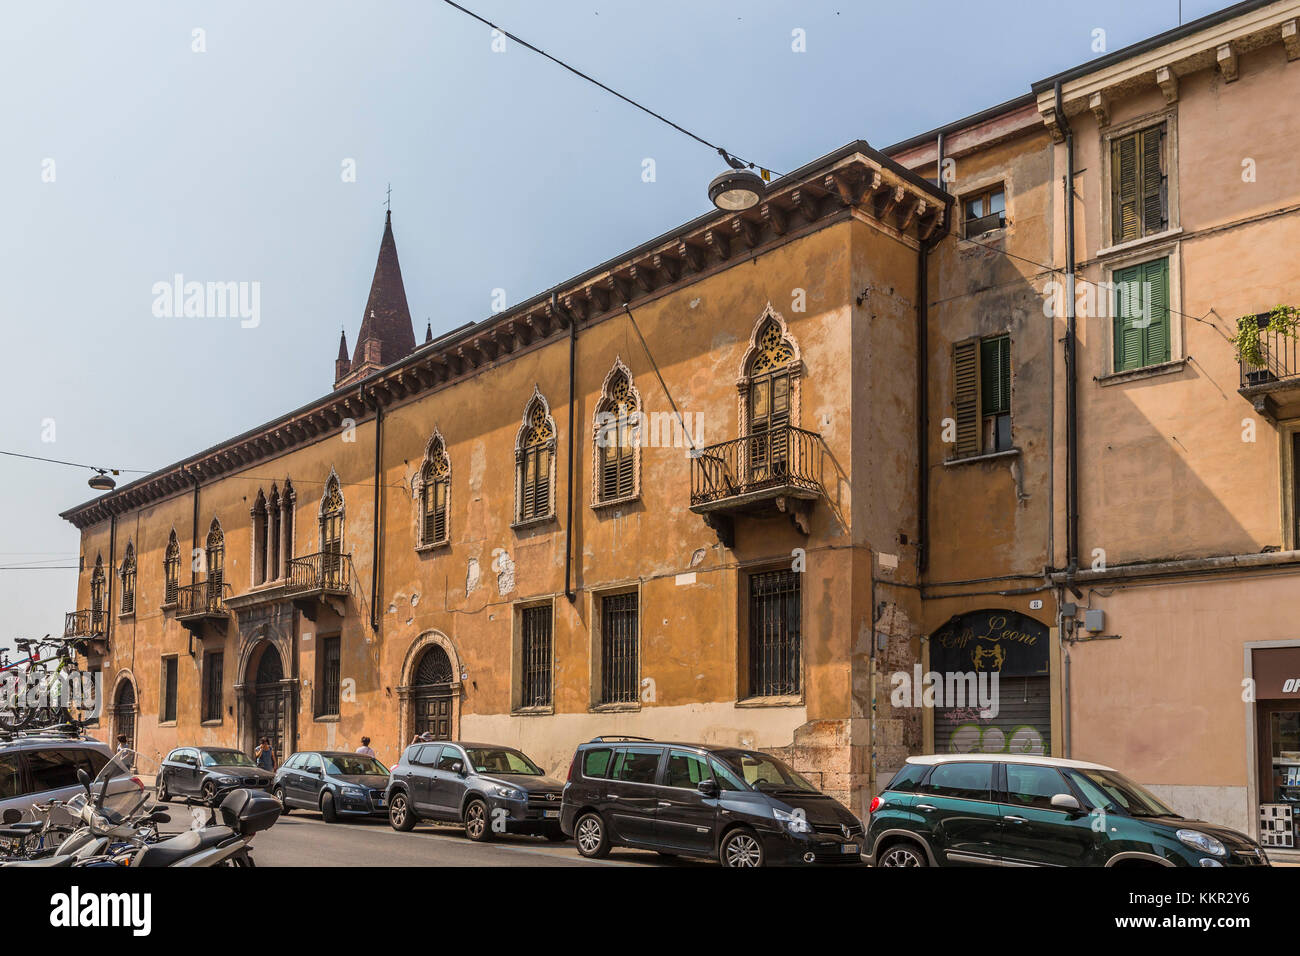 Palace Bottagisio, Renaissance architecture in the old town of Verona, via Leoni, Verona, Veneto, Italy, Europe Stock Photo